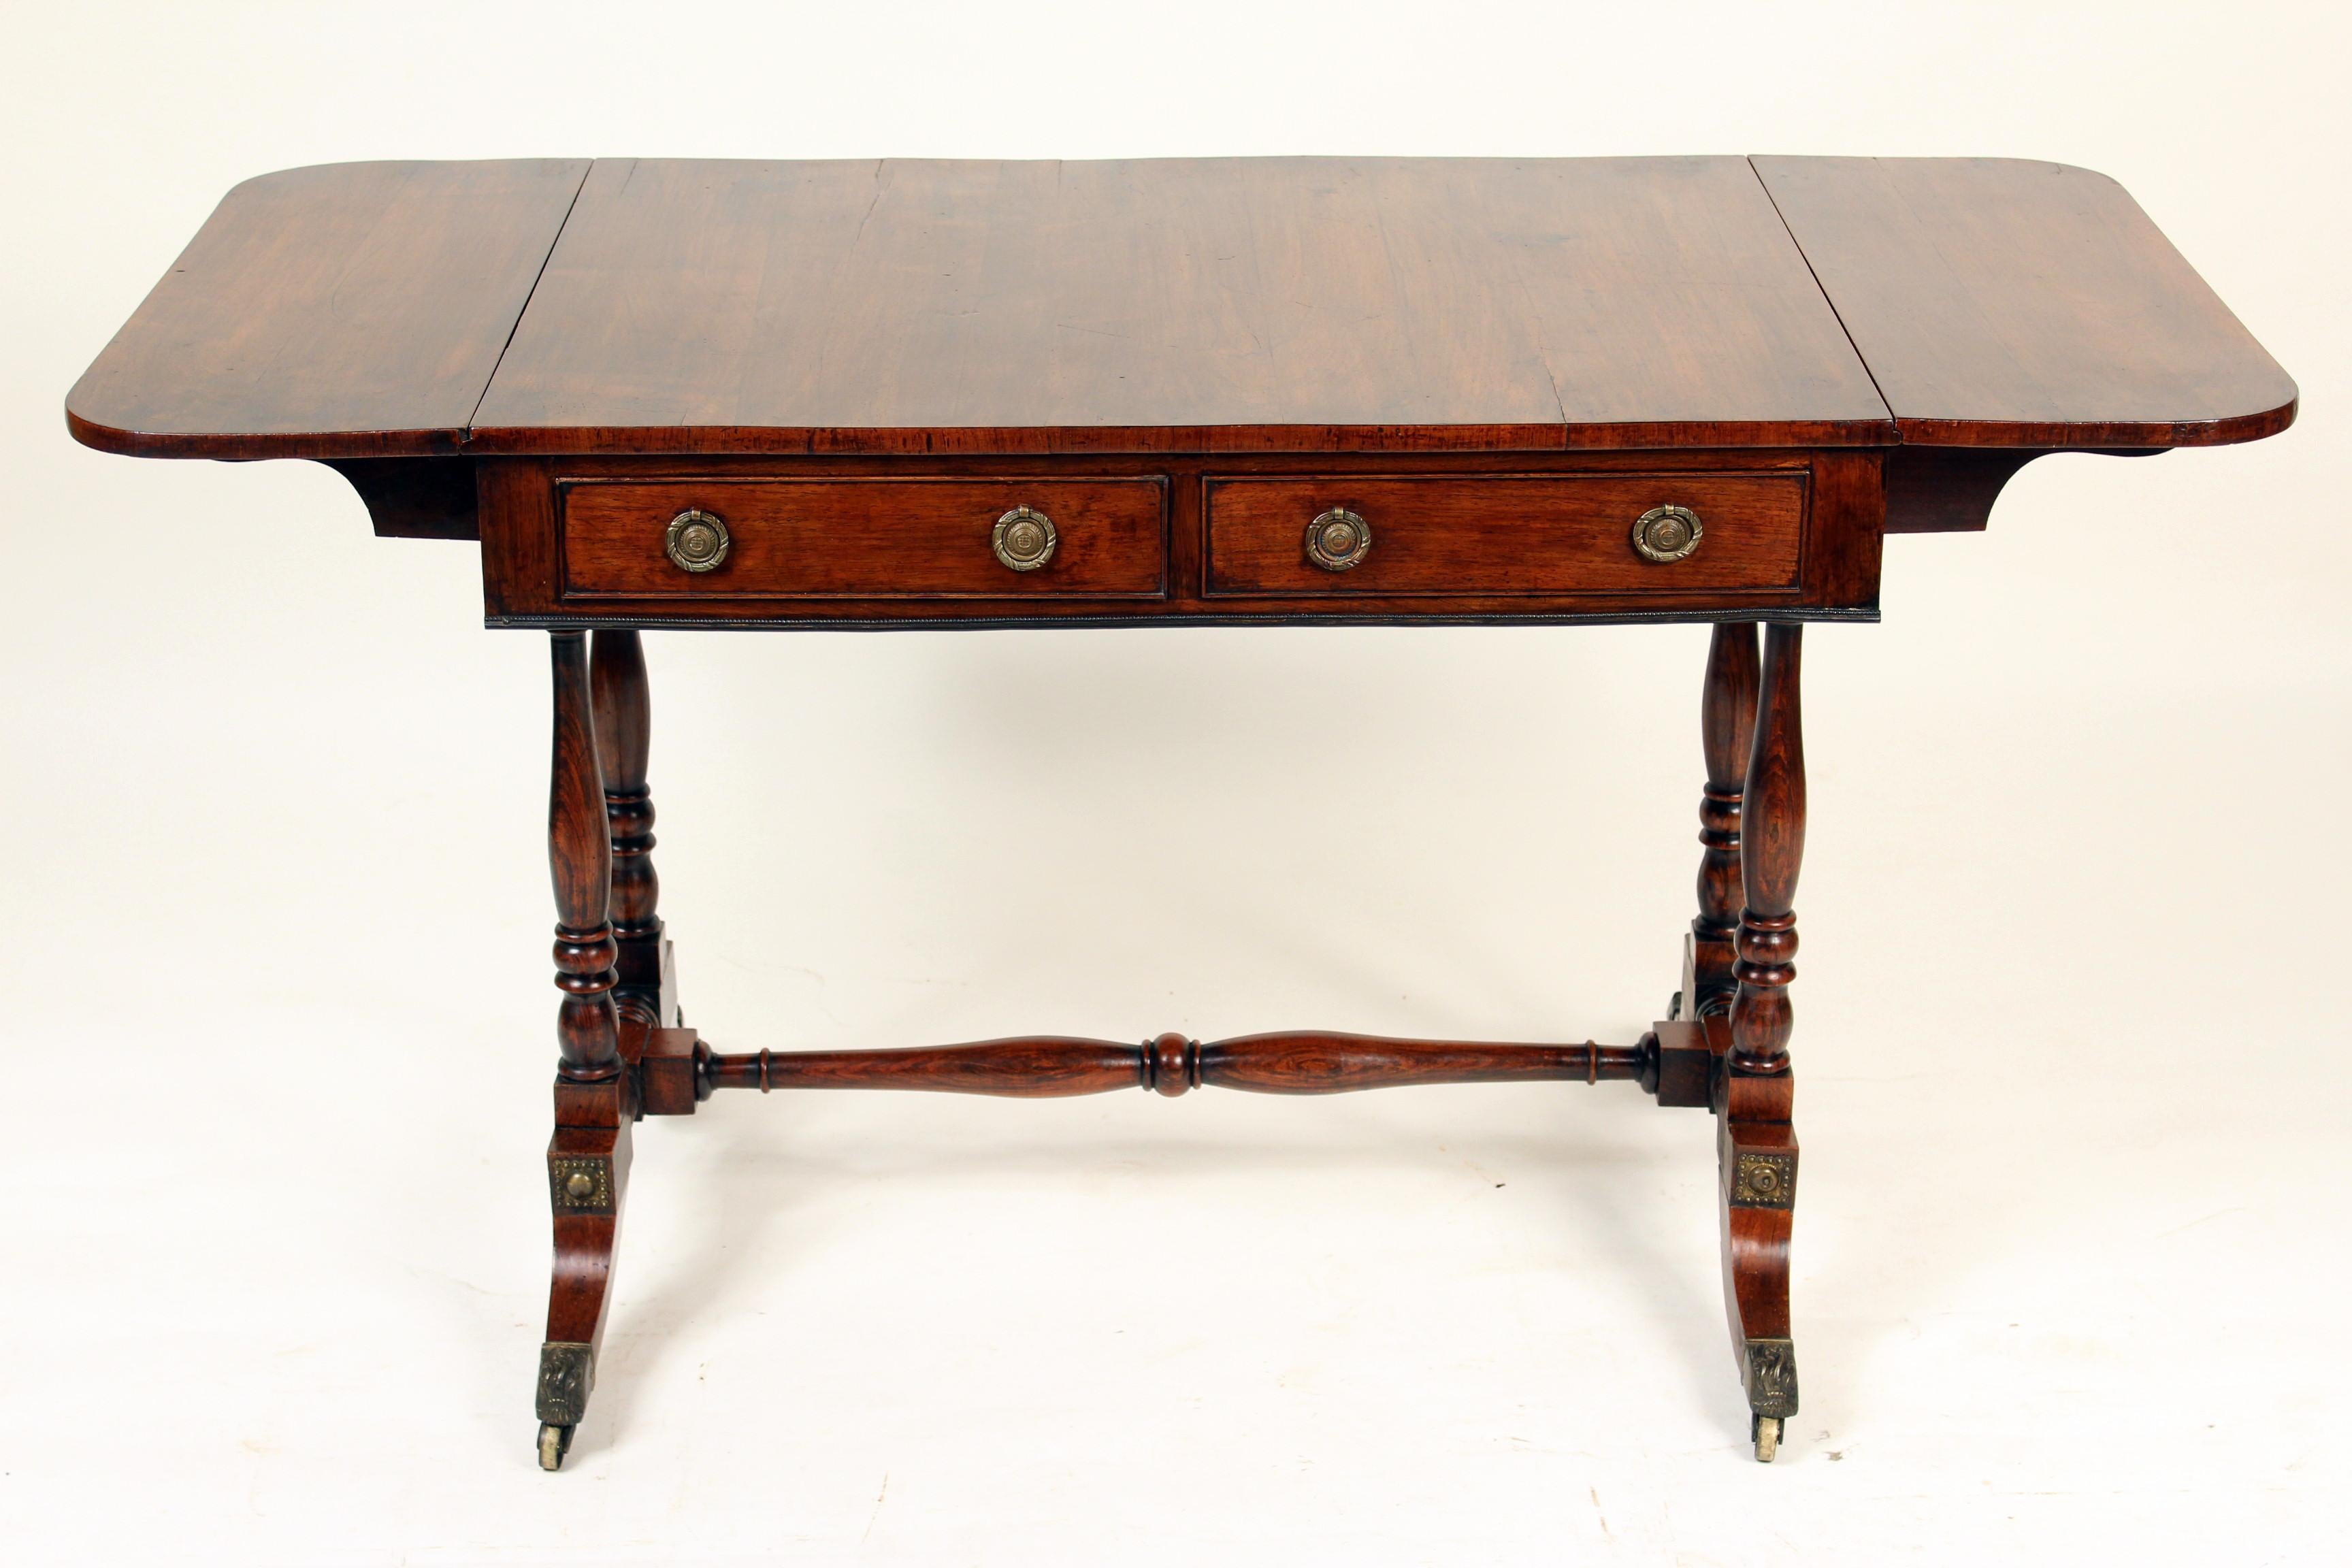 English regency rose wood sofa table, circa 1810. The width is 52.25